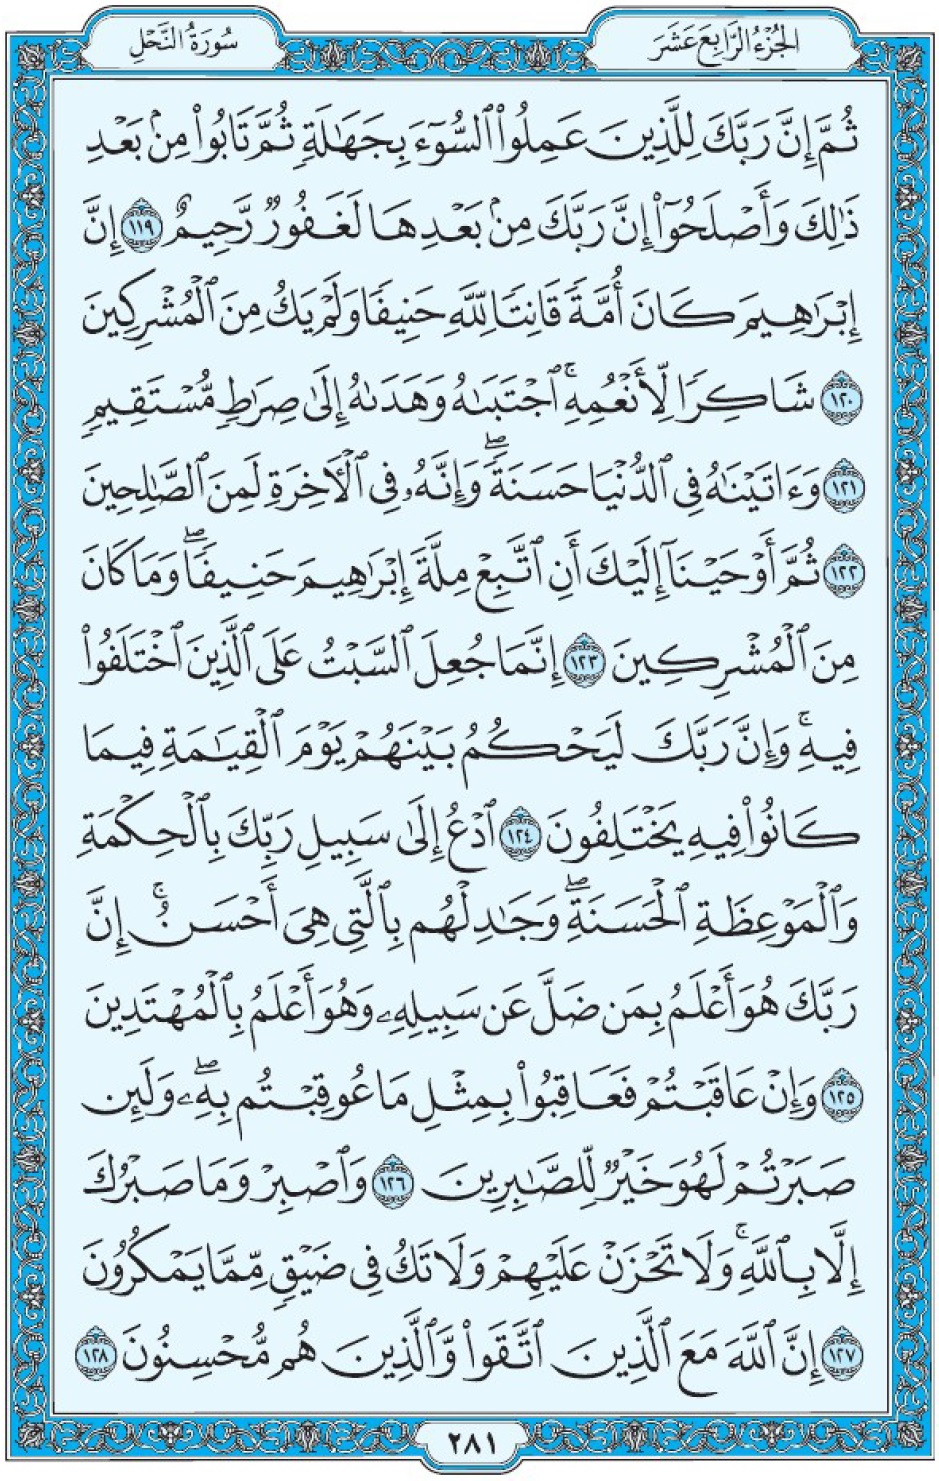 Коран Мединский мусхаф страница 281, Ан-Нахль, аят 119-128